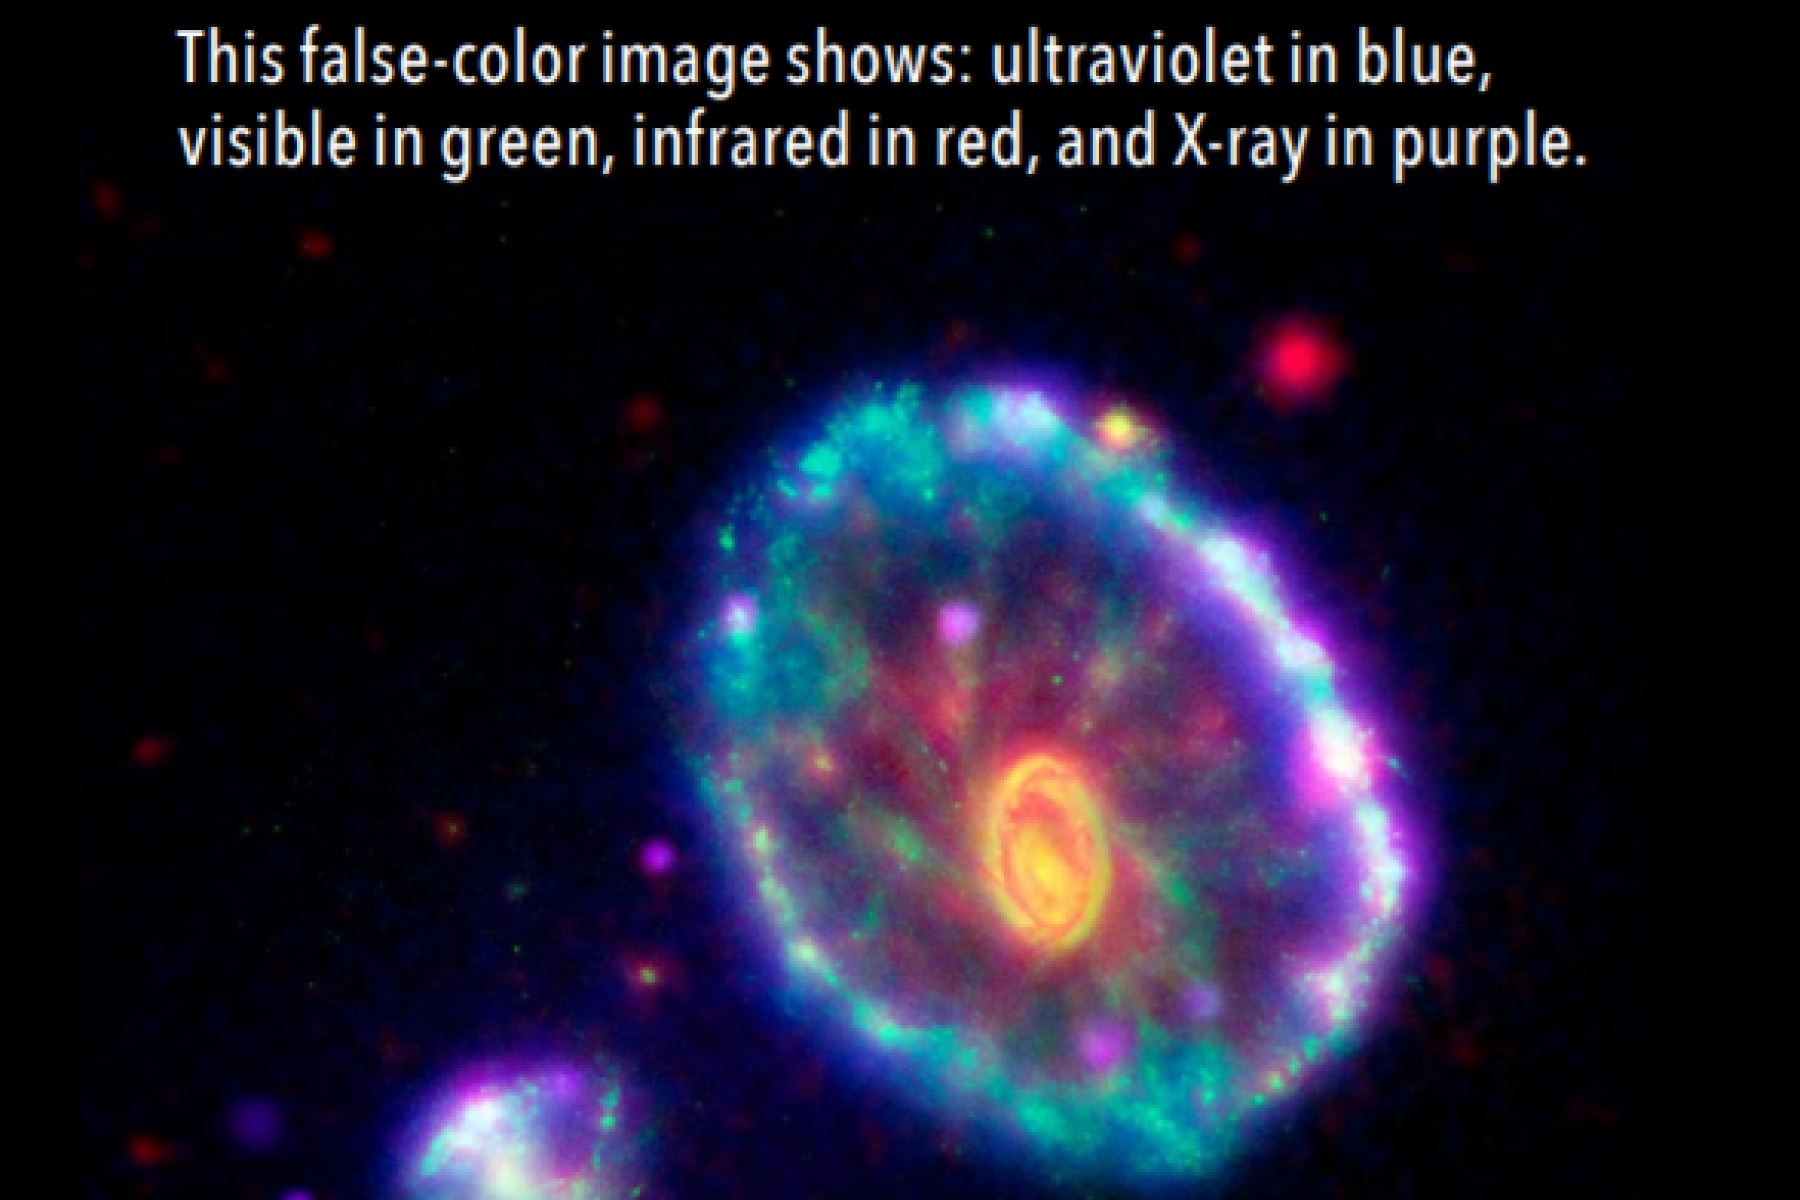 An image of the Cartwheel Galaxy